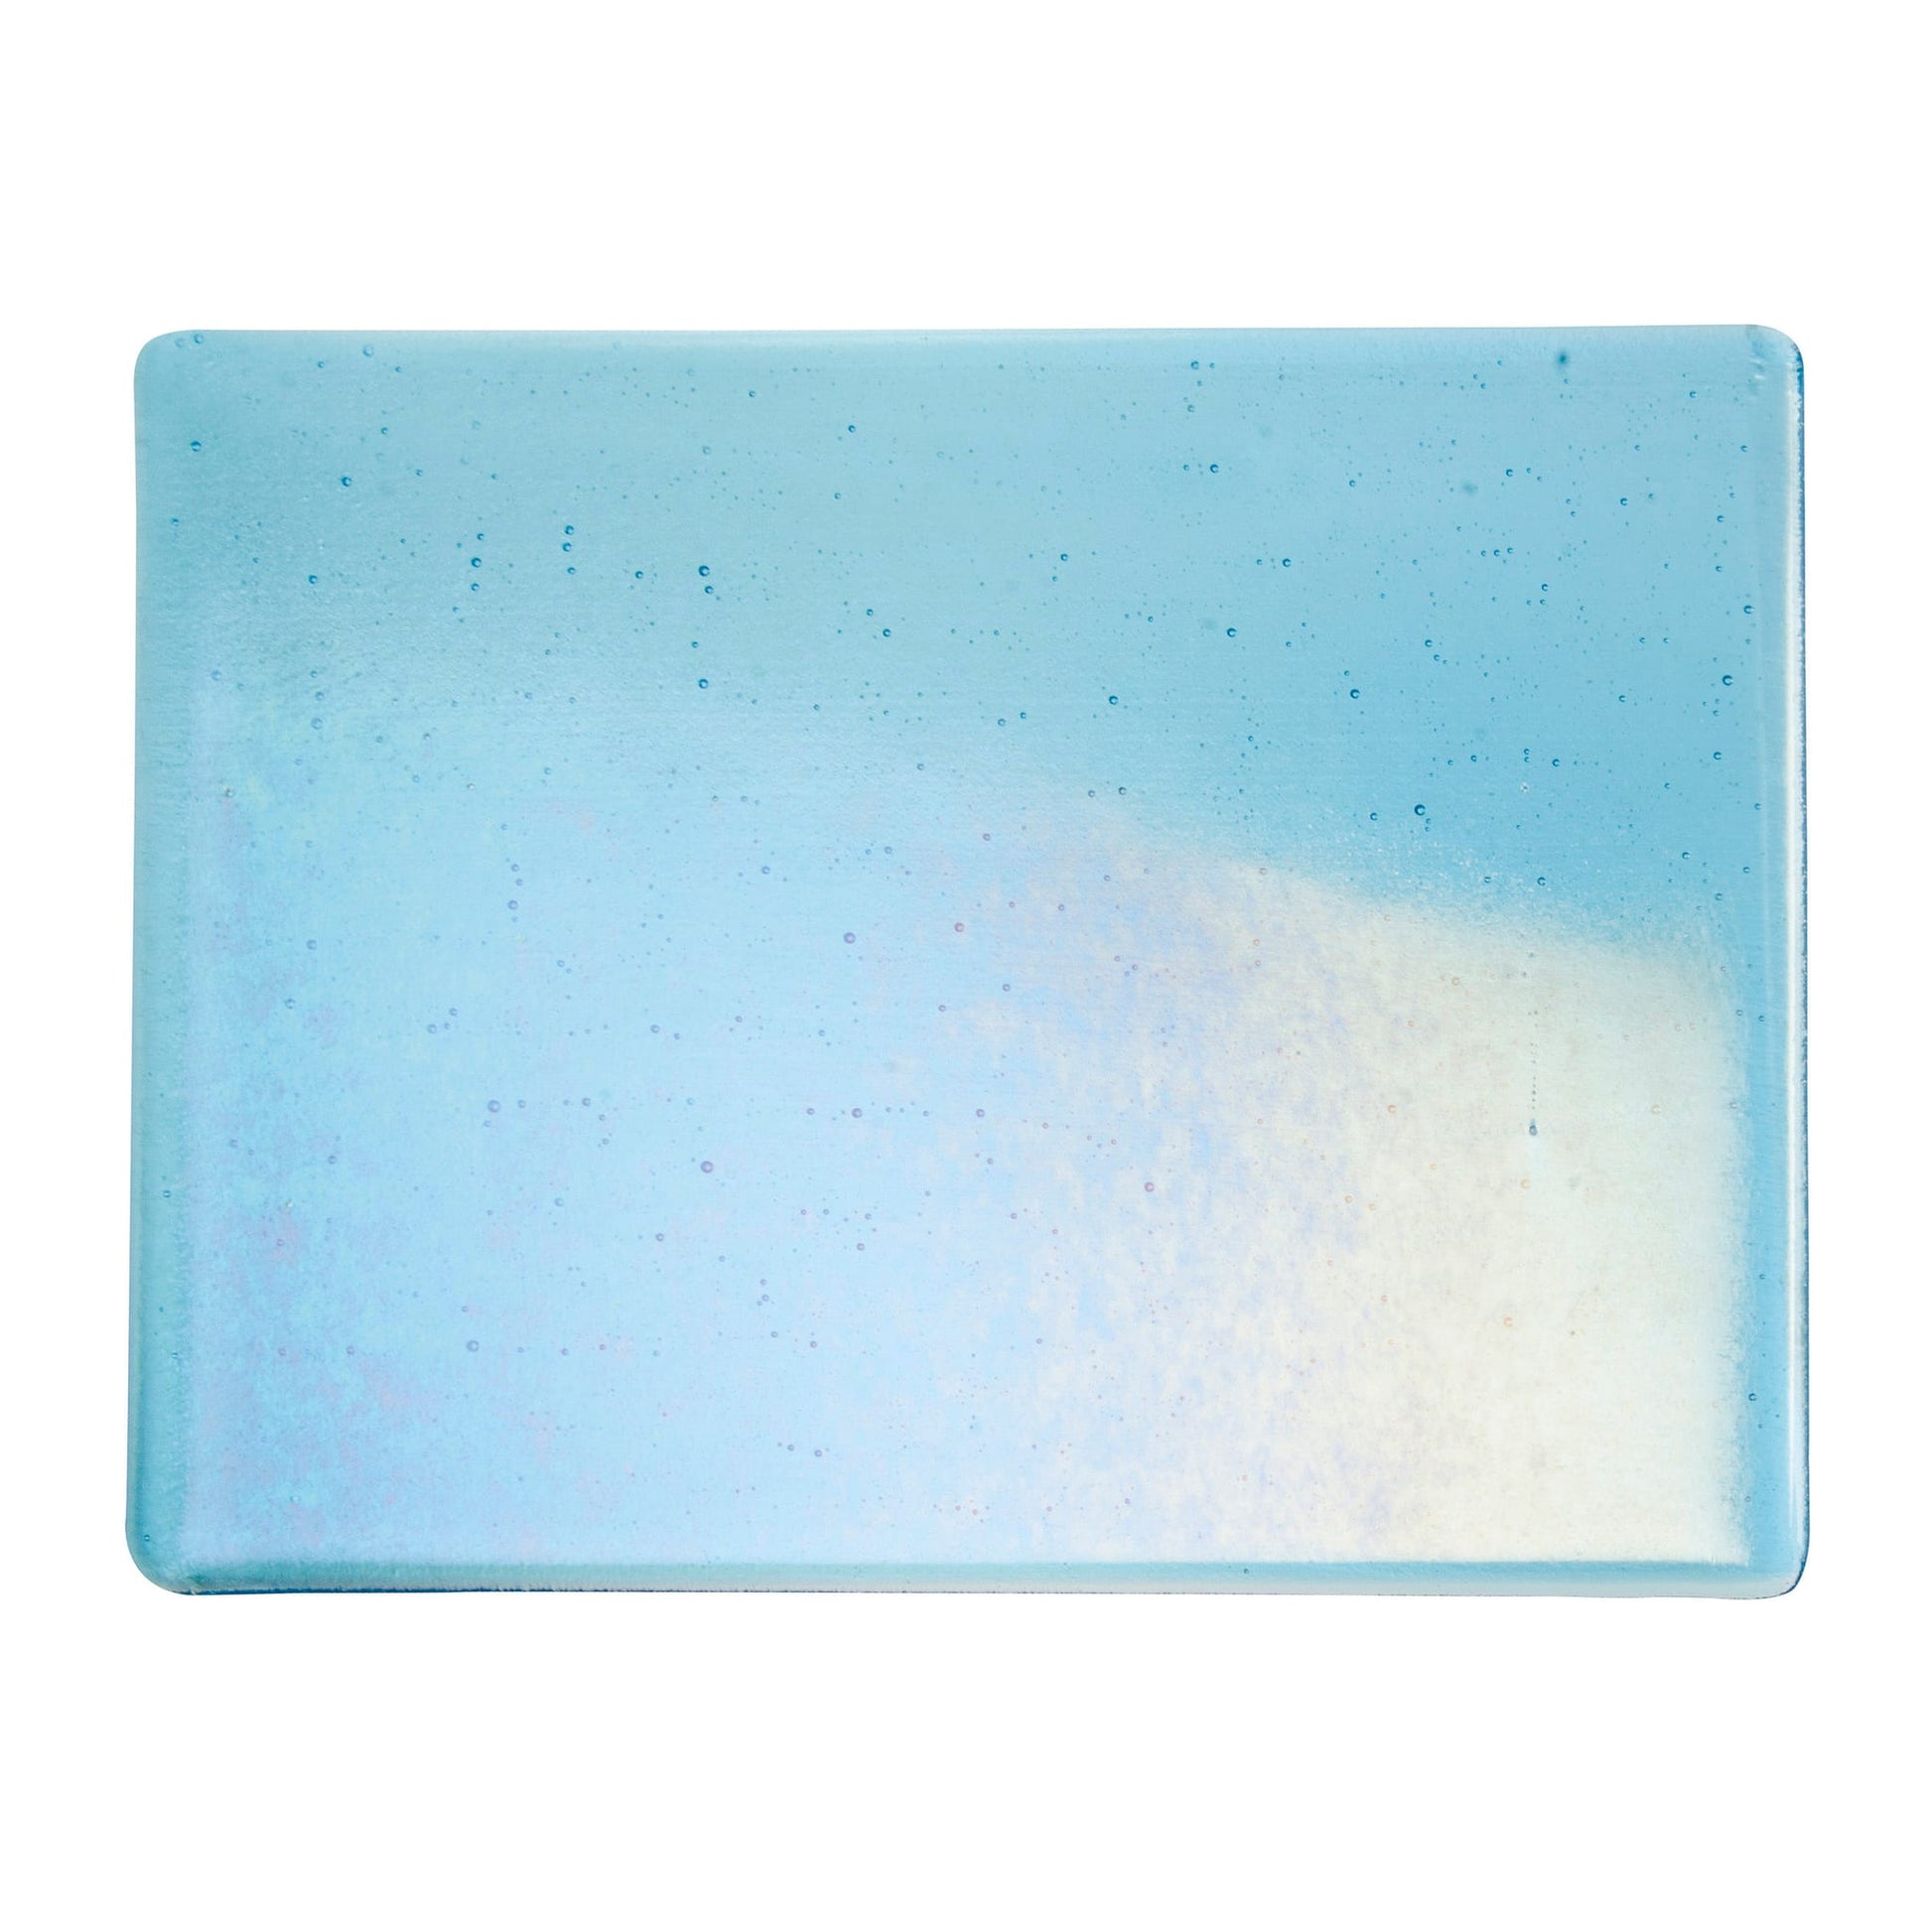 Bullseye COE90 Fusing Glass 001416 Light Turquoise Blue, Iridescent, Rainbow Half Sheet